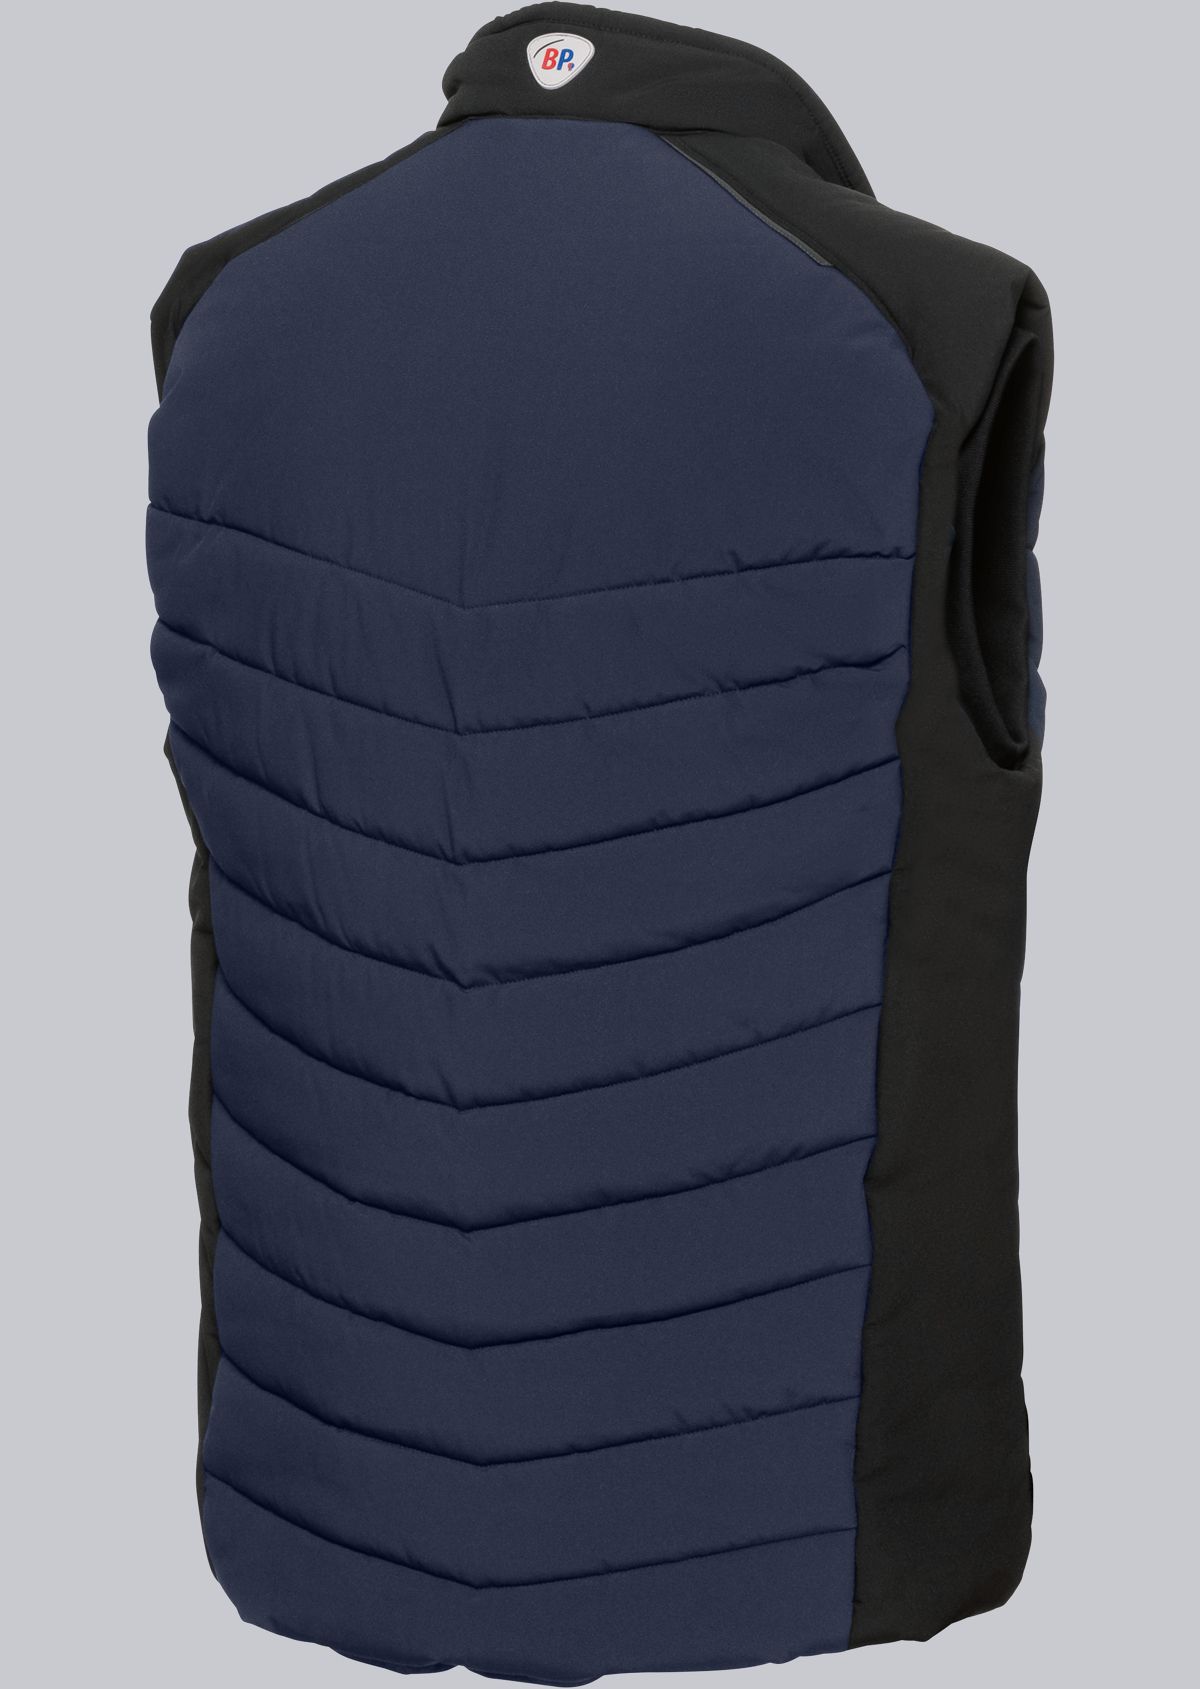 BP® Thermal outdoor waistcoat